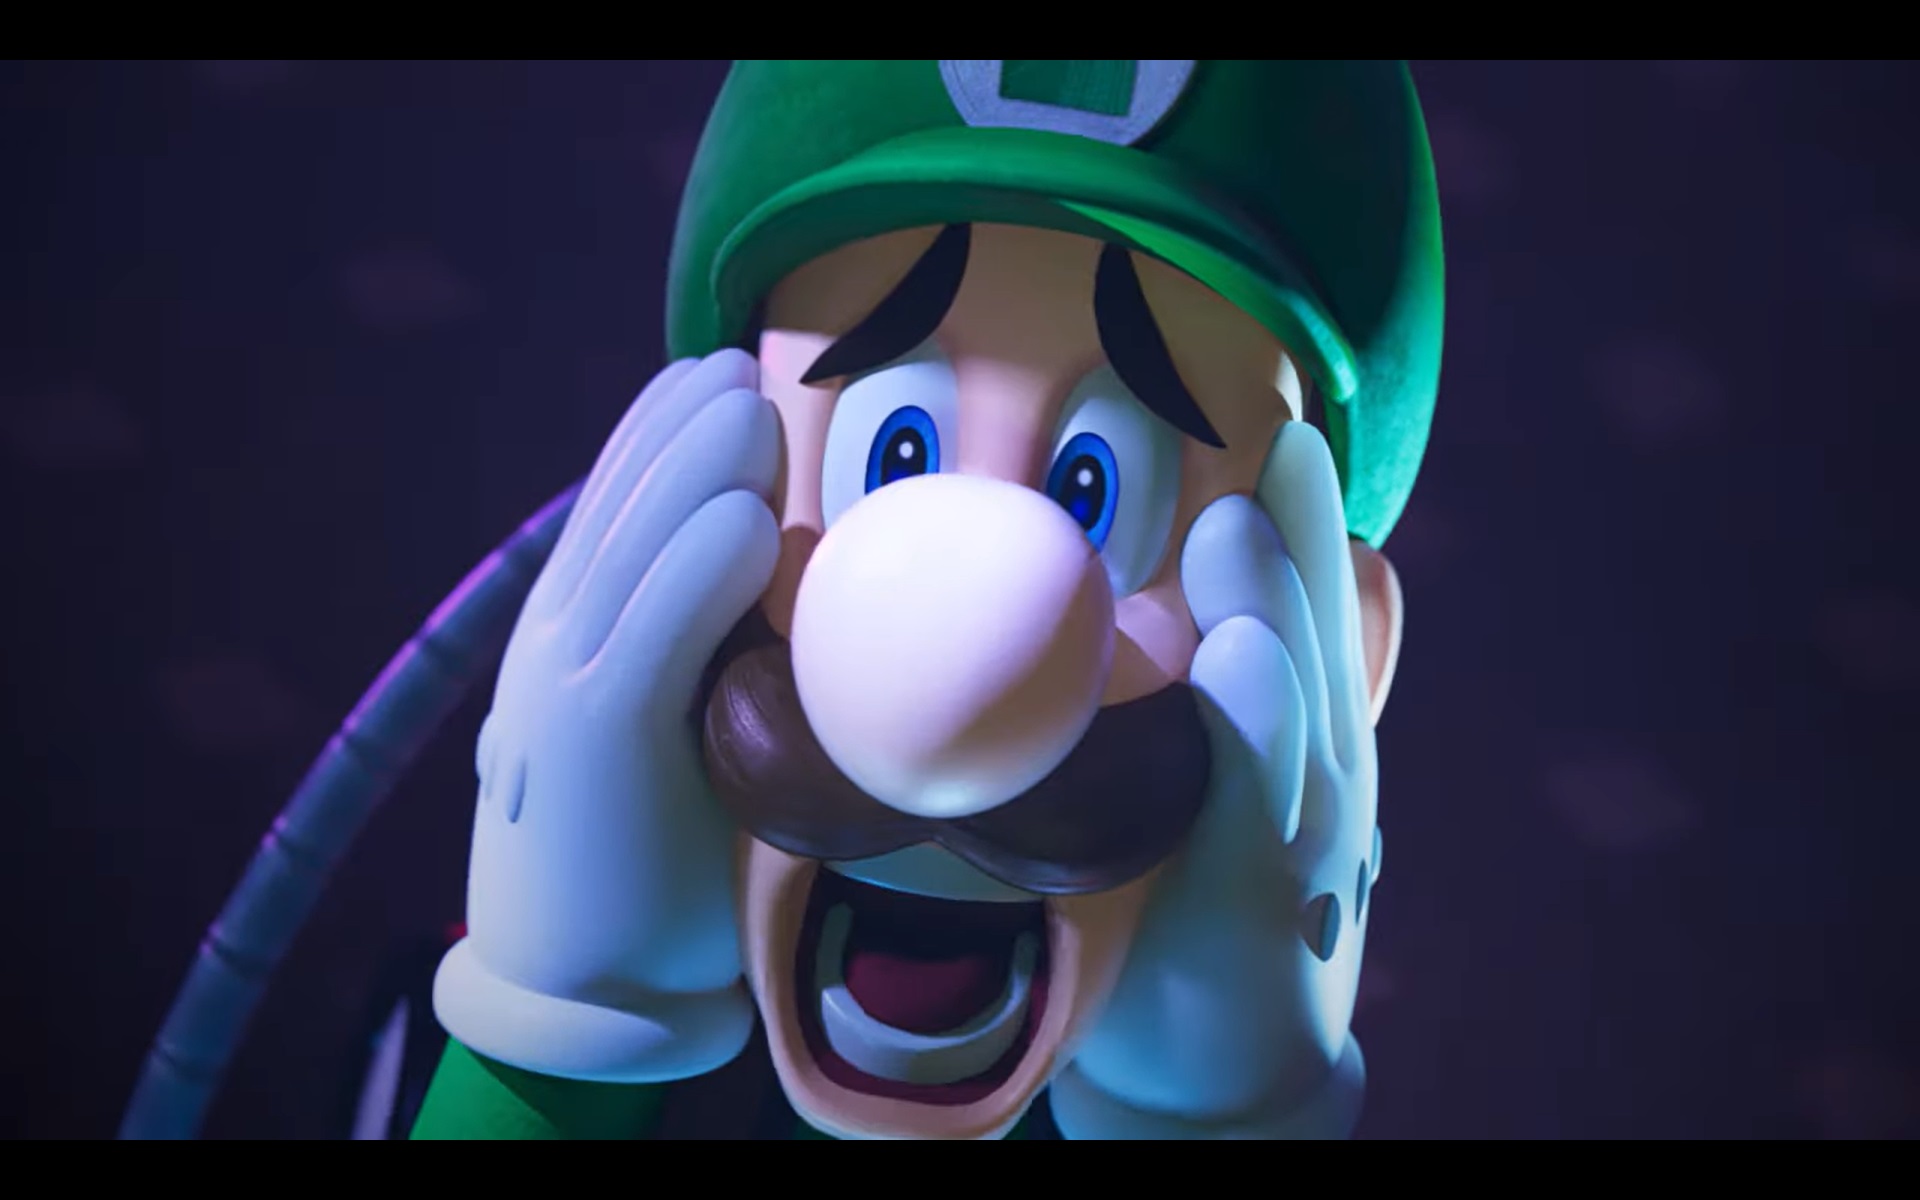 Luigi's Mansion 2 overview